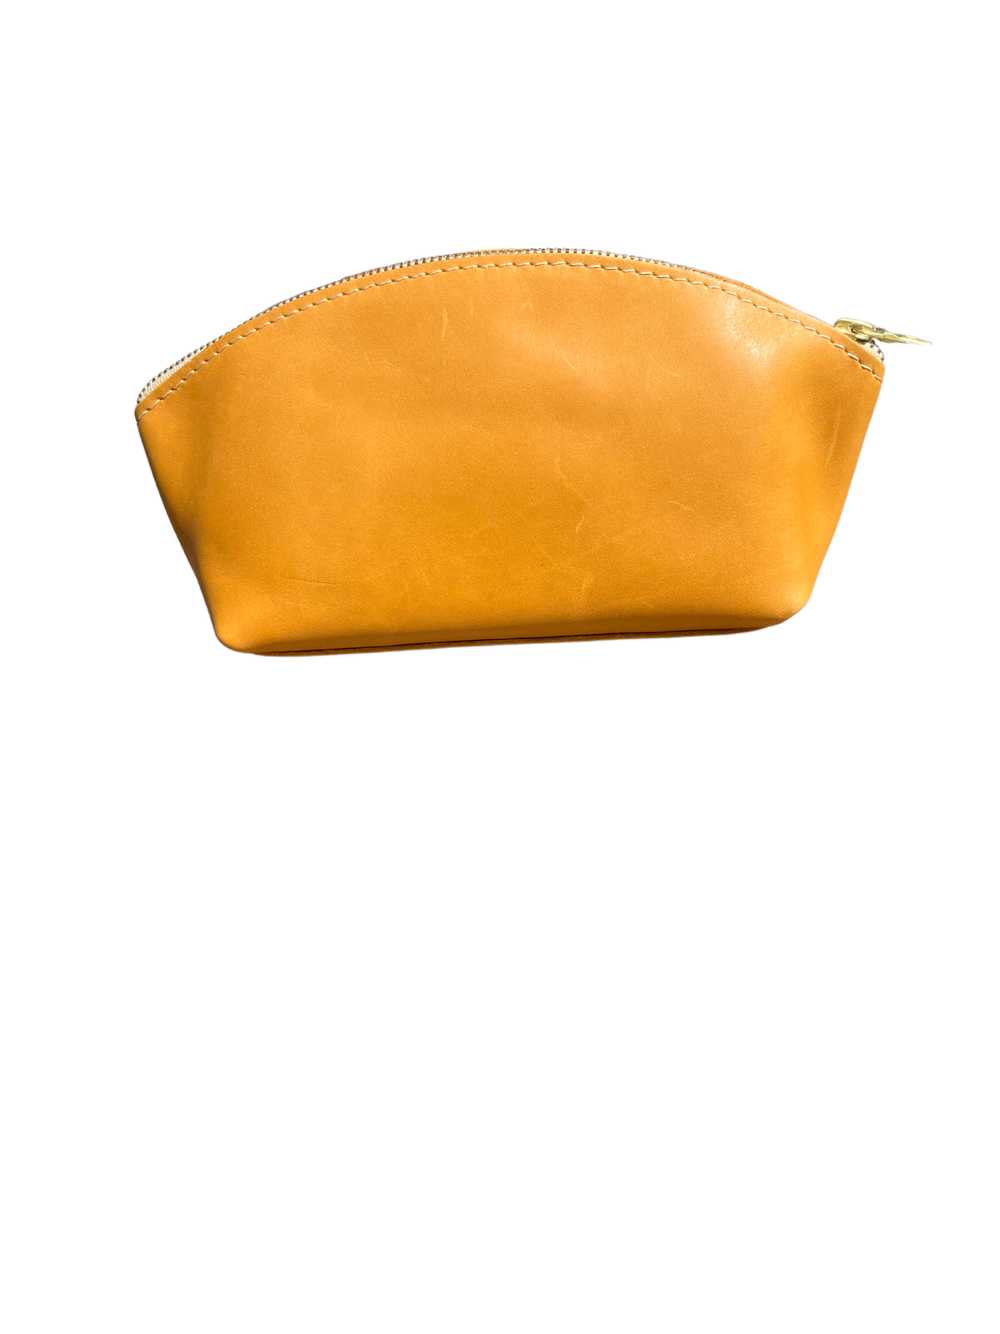 Portland Leather Eclipse Makeup Bag - image 5